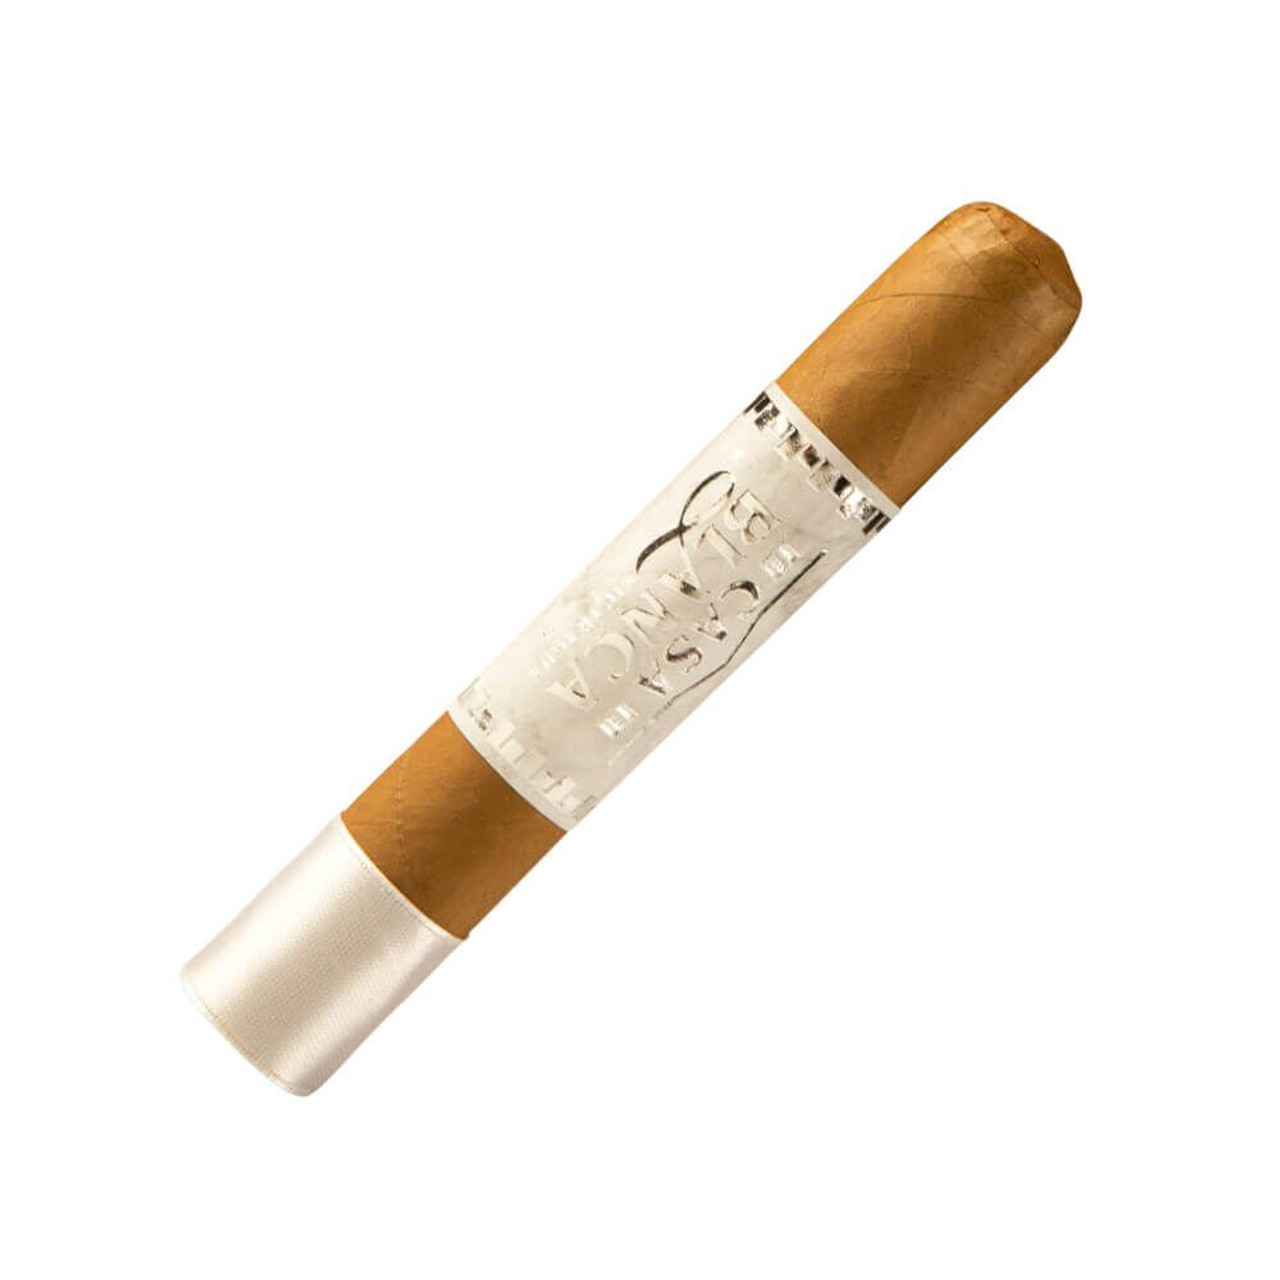 Casa Blanca Nicaragua Robusto Natural Cigars - 5 x 52 Single